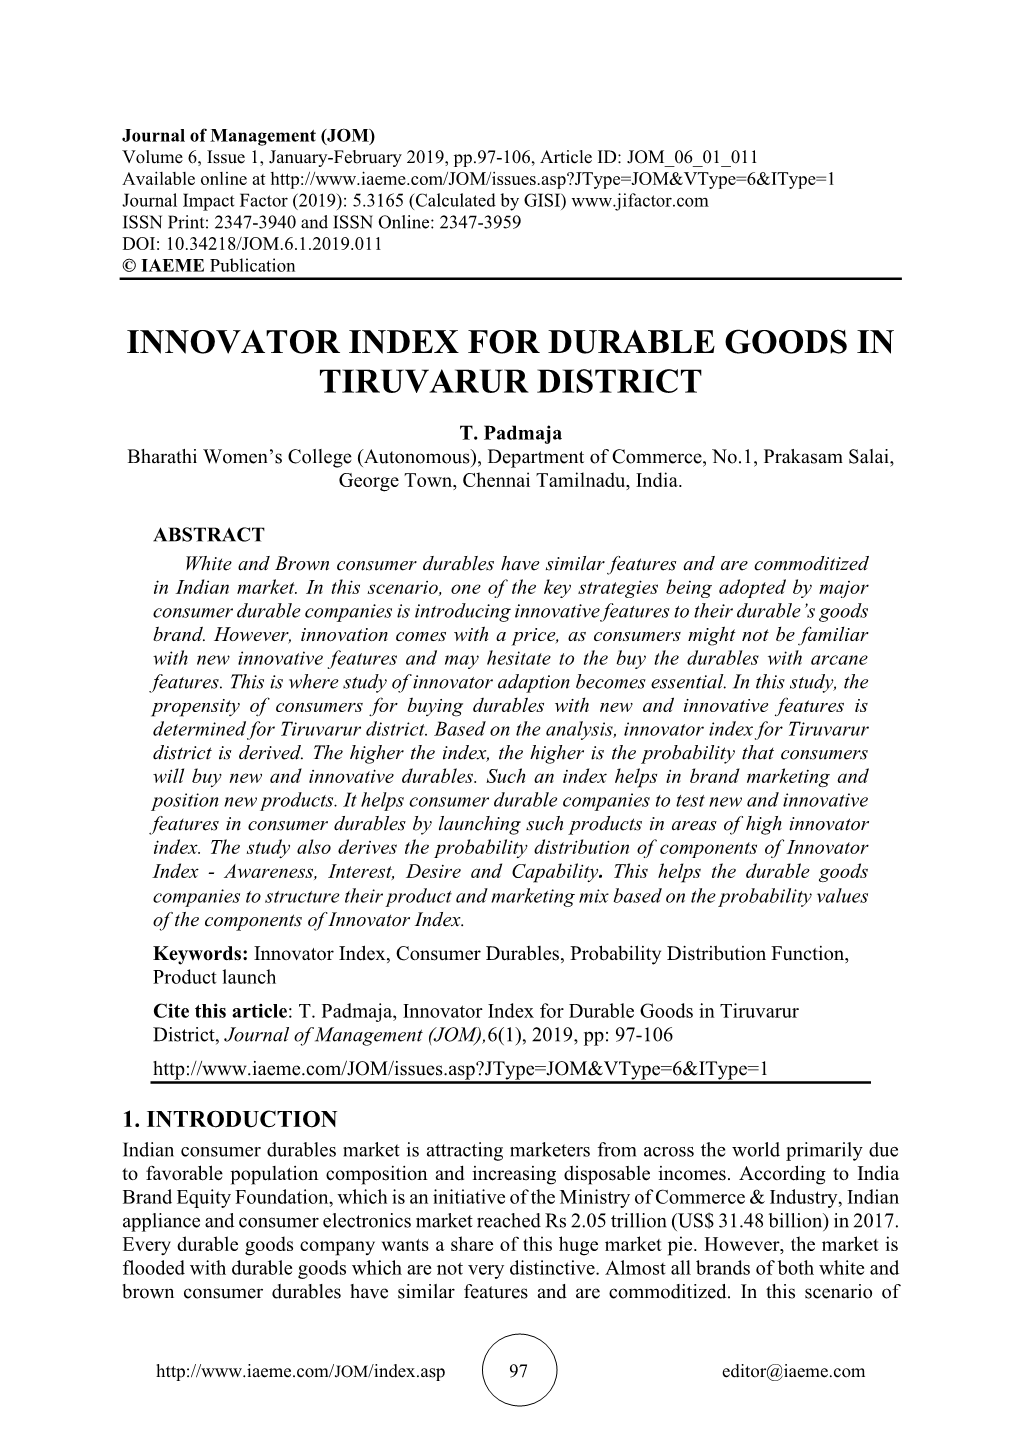 Innovator Index for Durable Goods in Tiruvarur District